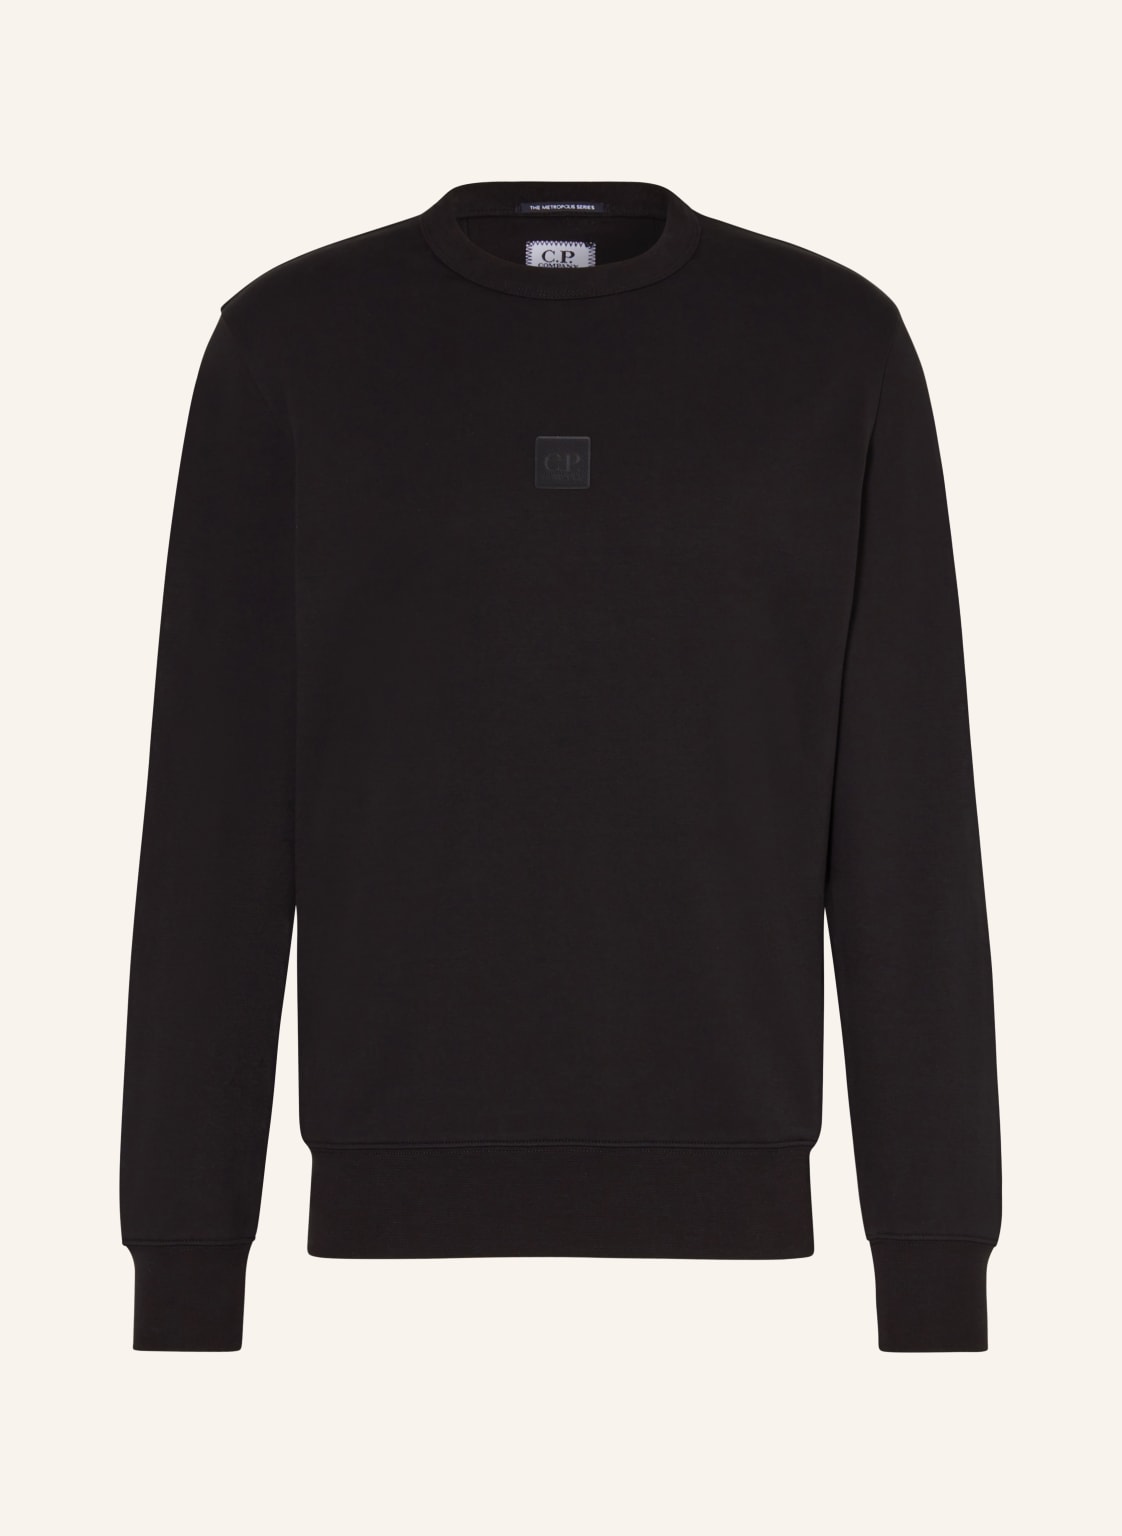 C.P. Company Sweatshirt schwarz von C.P. Company